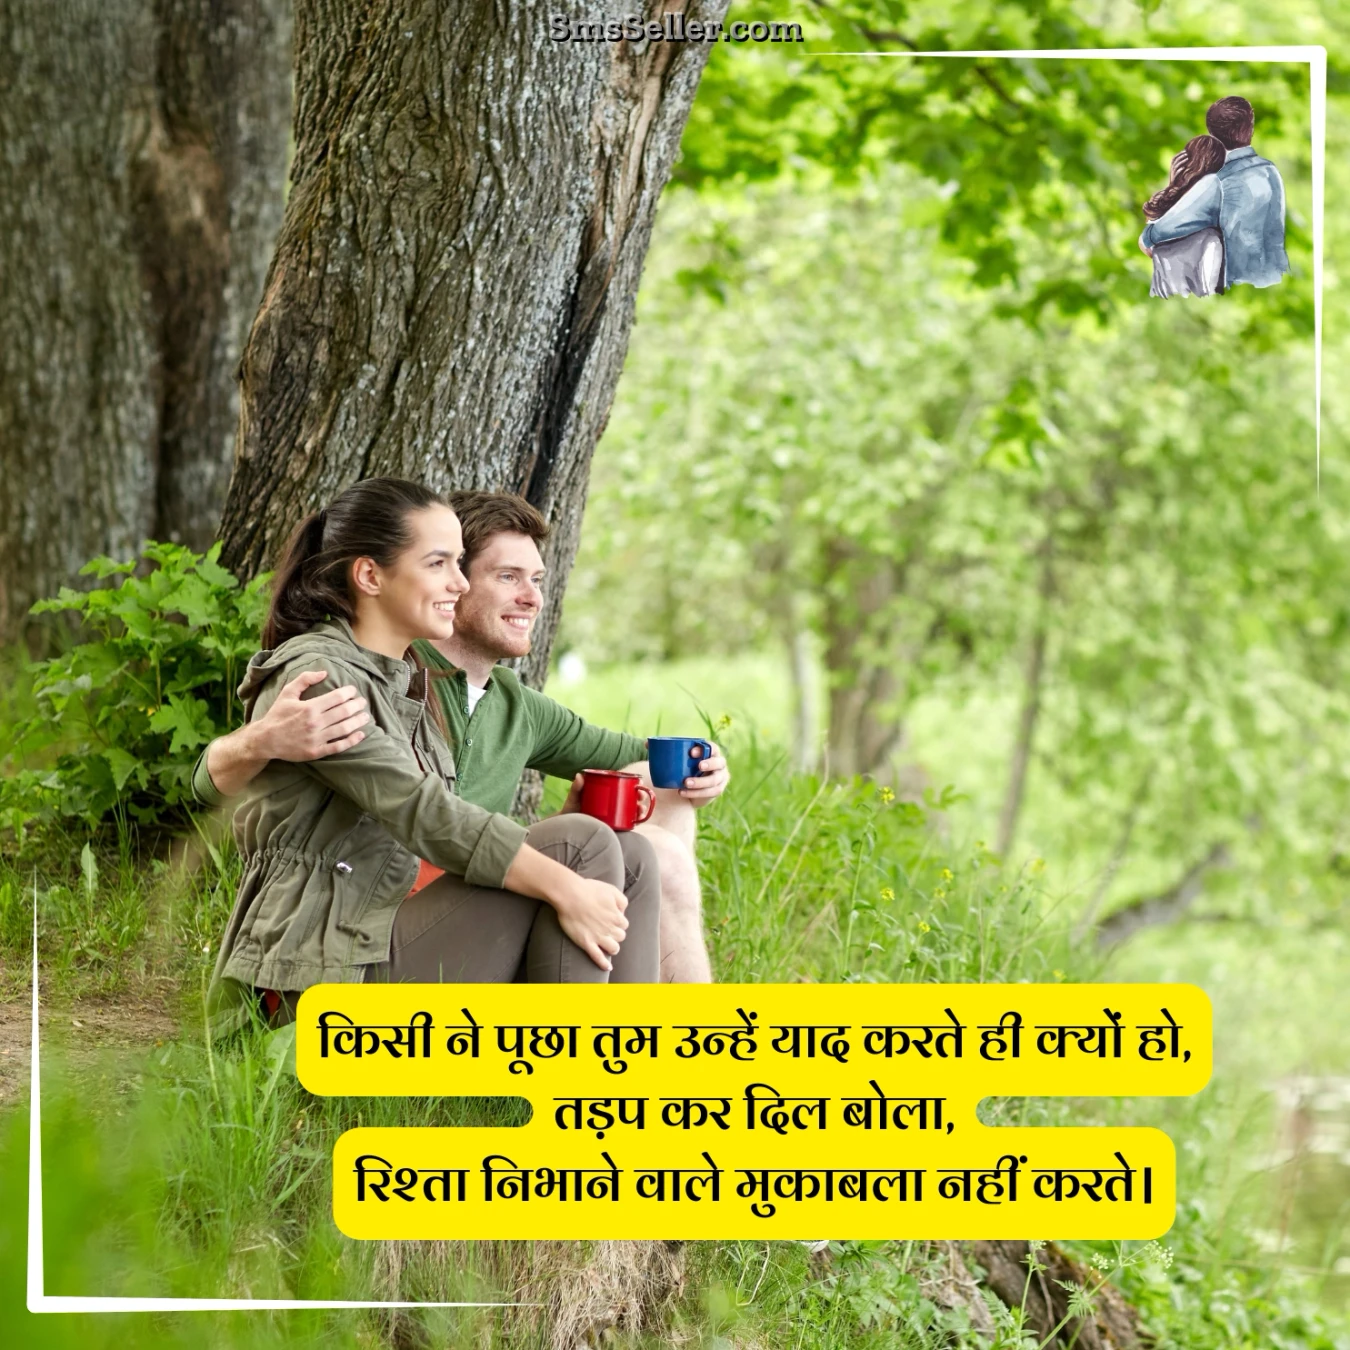 about love quotes in hindi kisi ne poochha tumko dekh